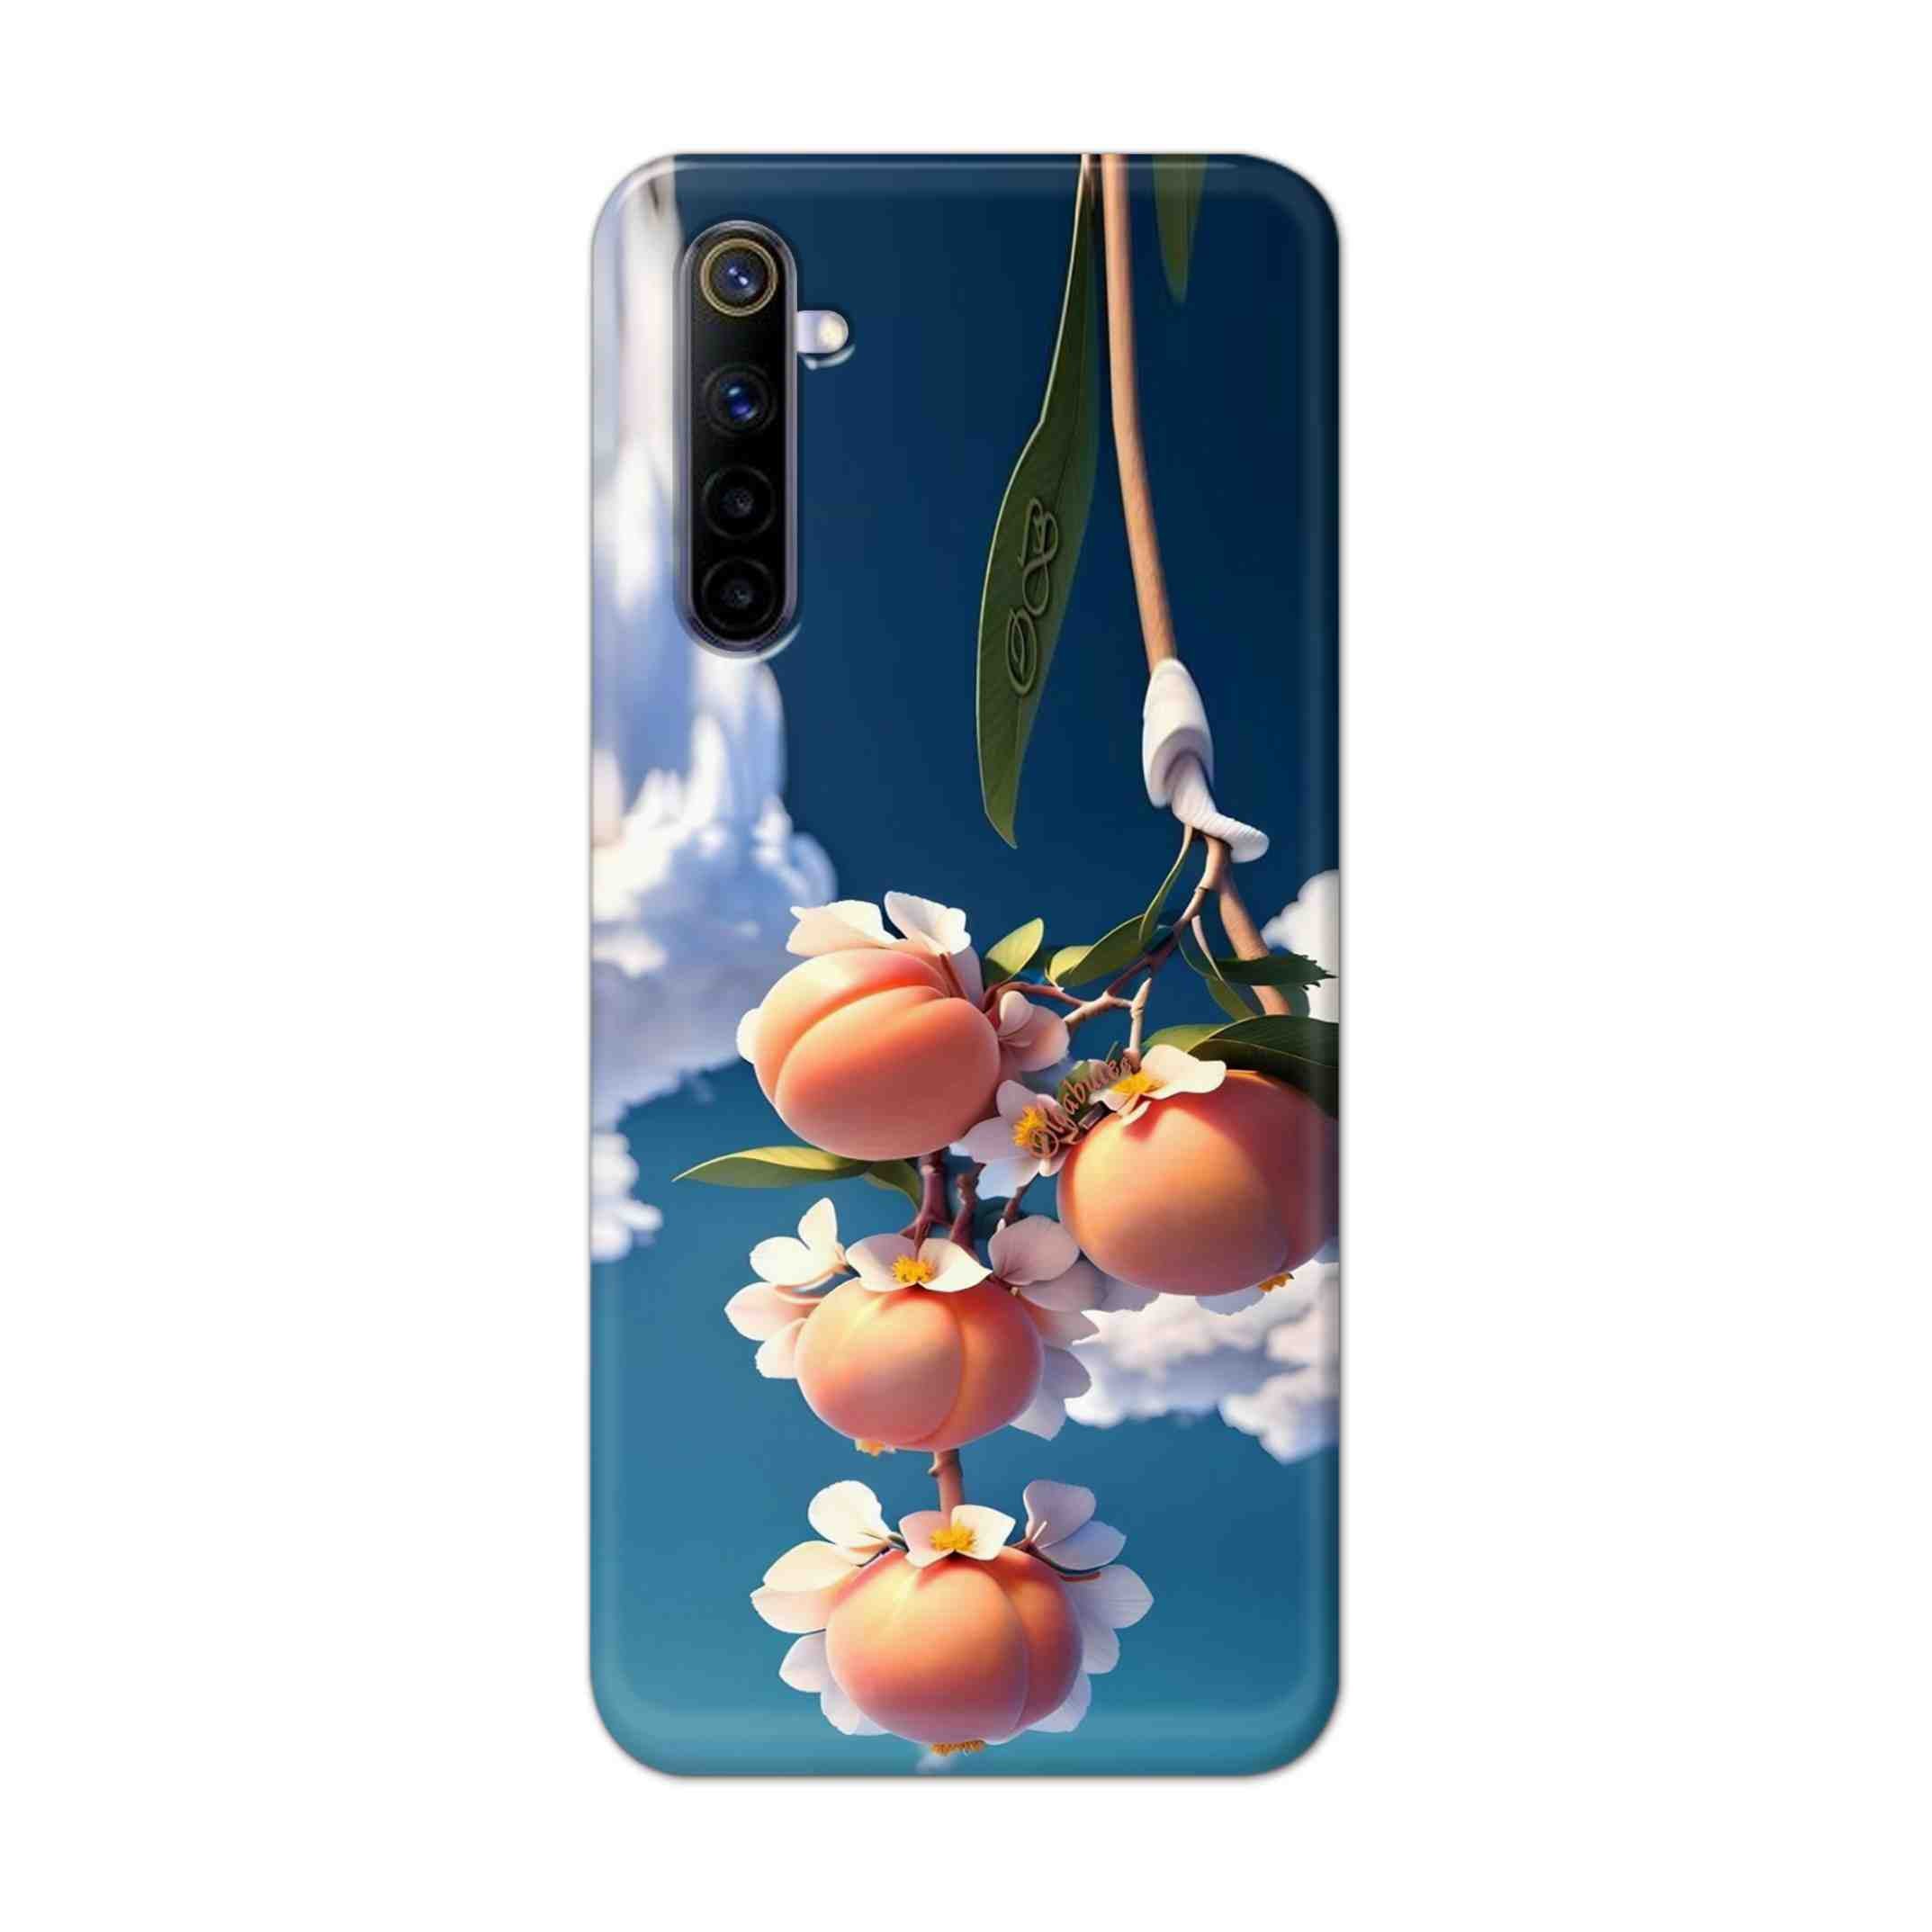 Buy Fruit Hard Back Mobile Phone Case Cover For REALME 6 Online